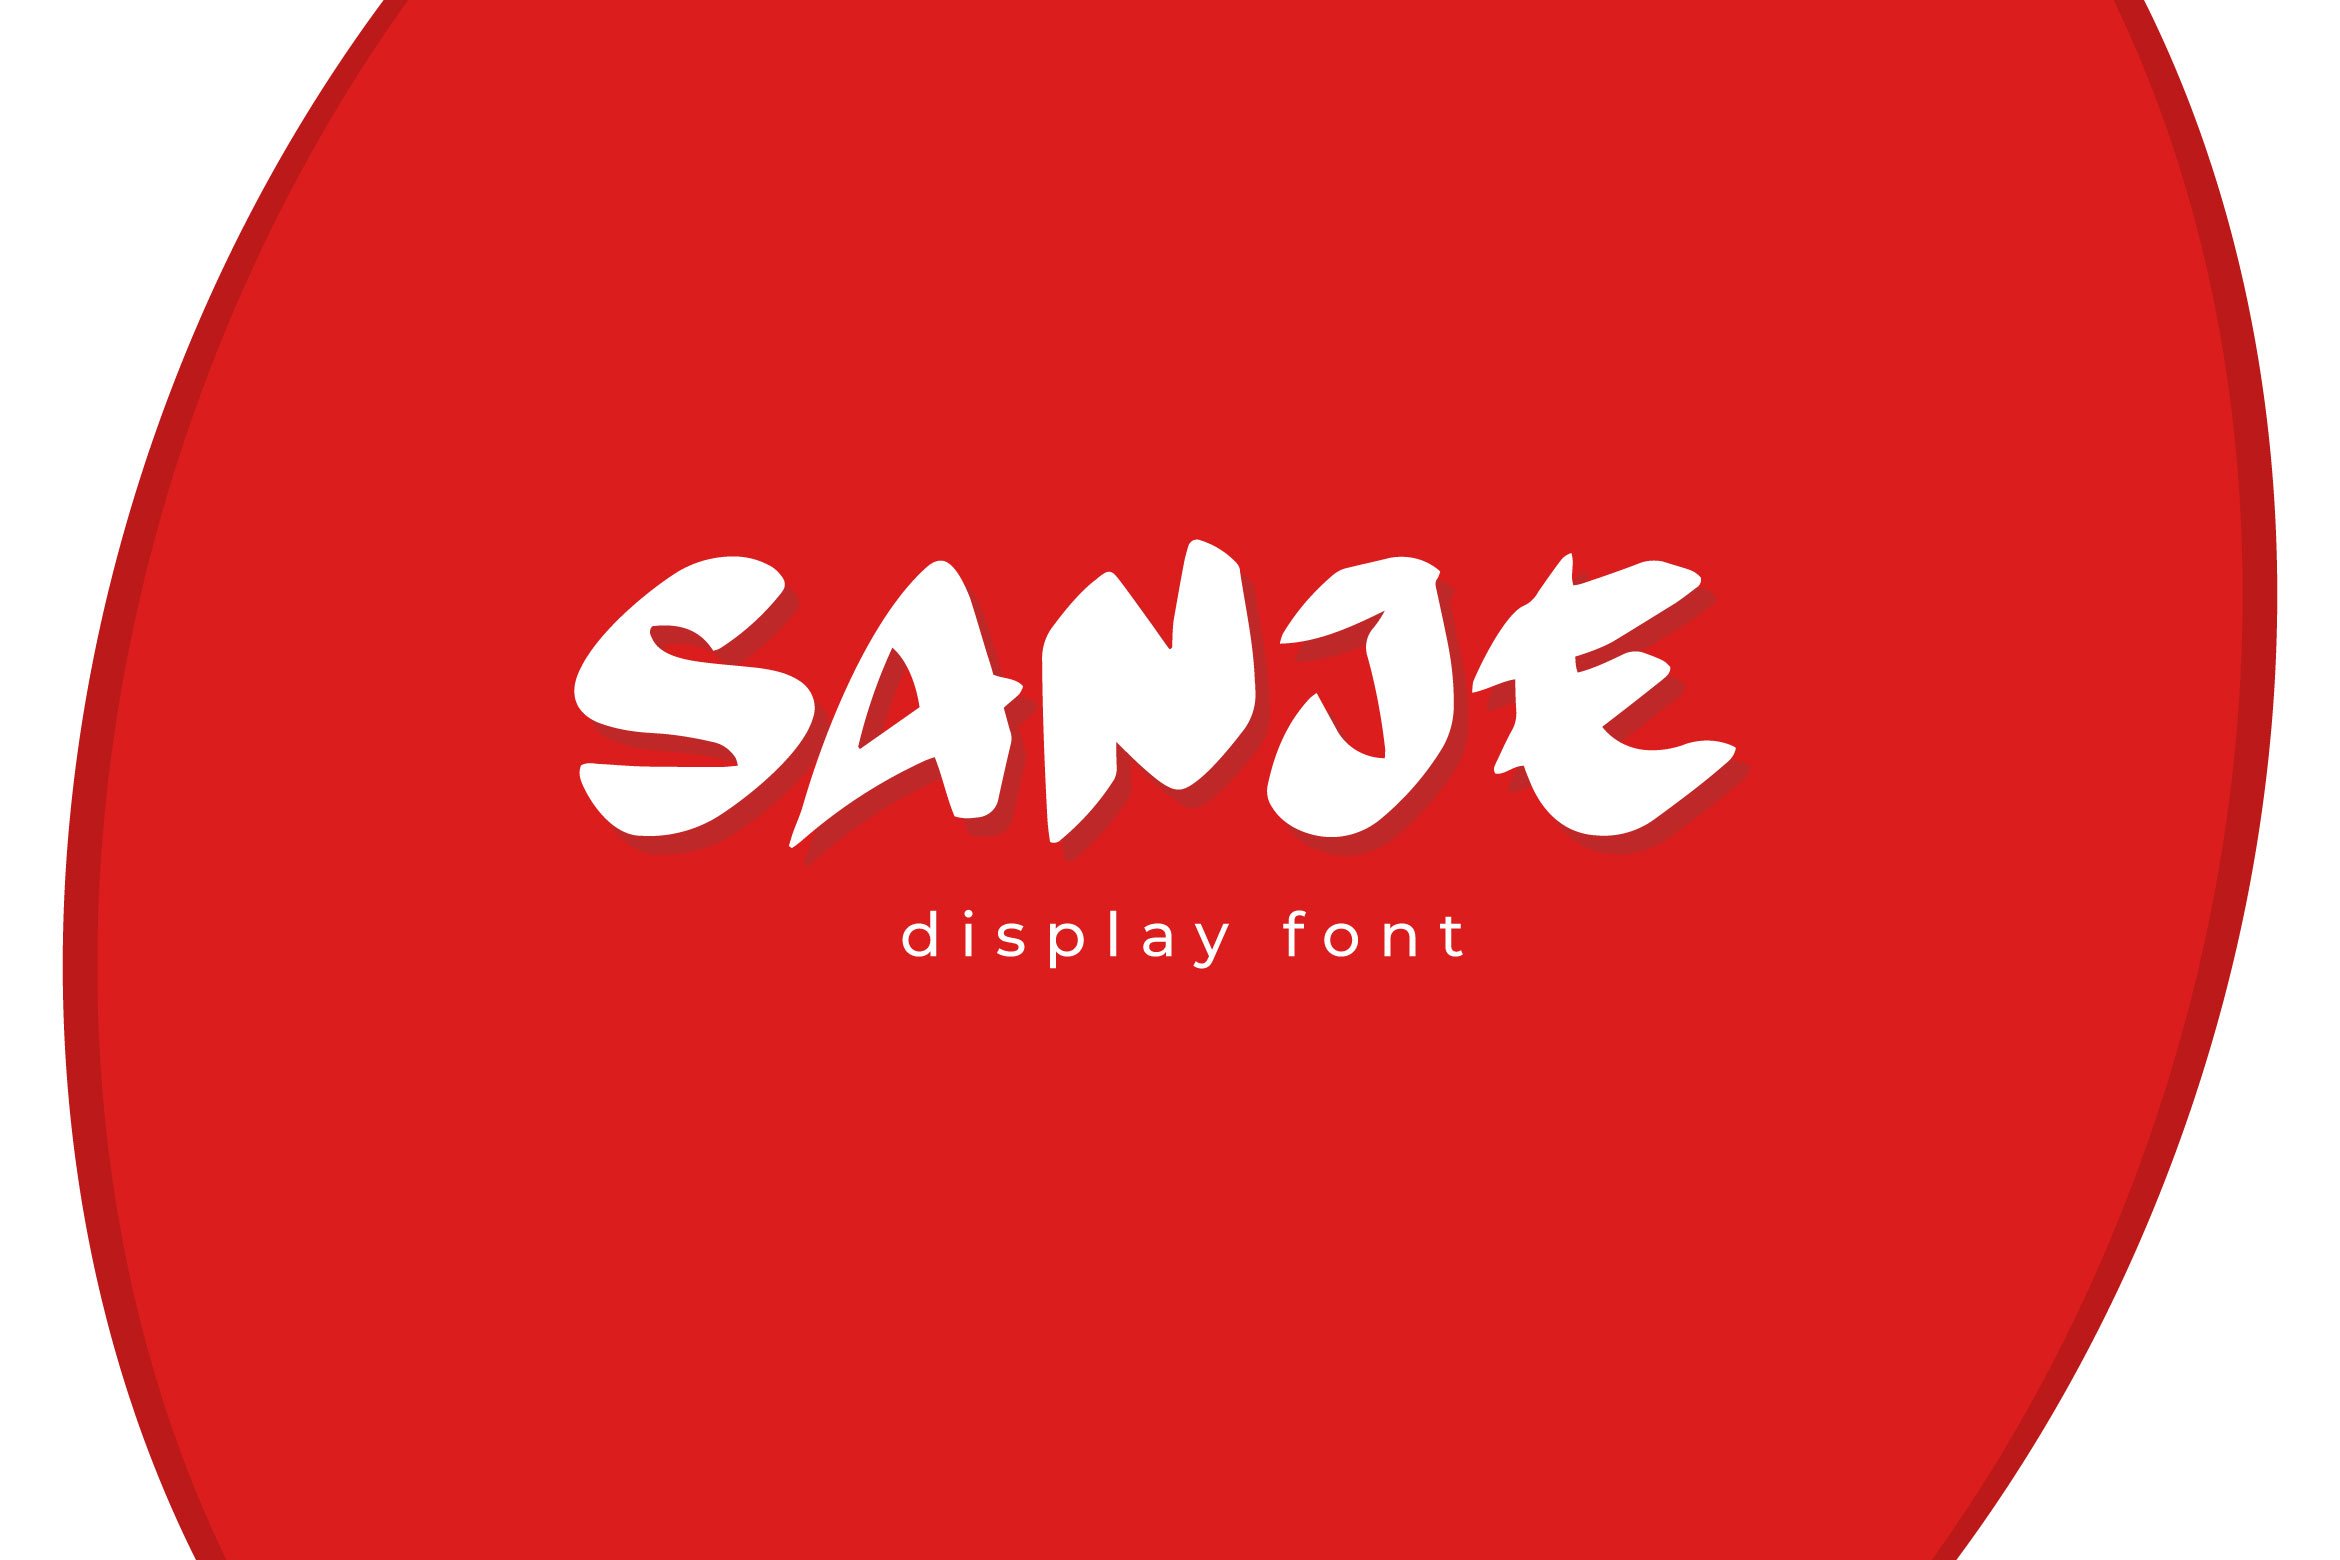 Sanje - Japanese Display Font cover image.